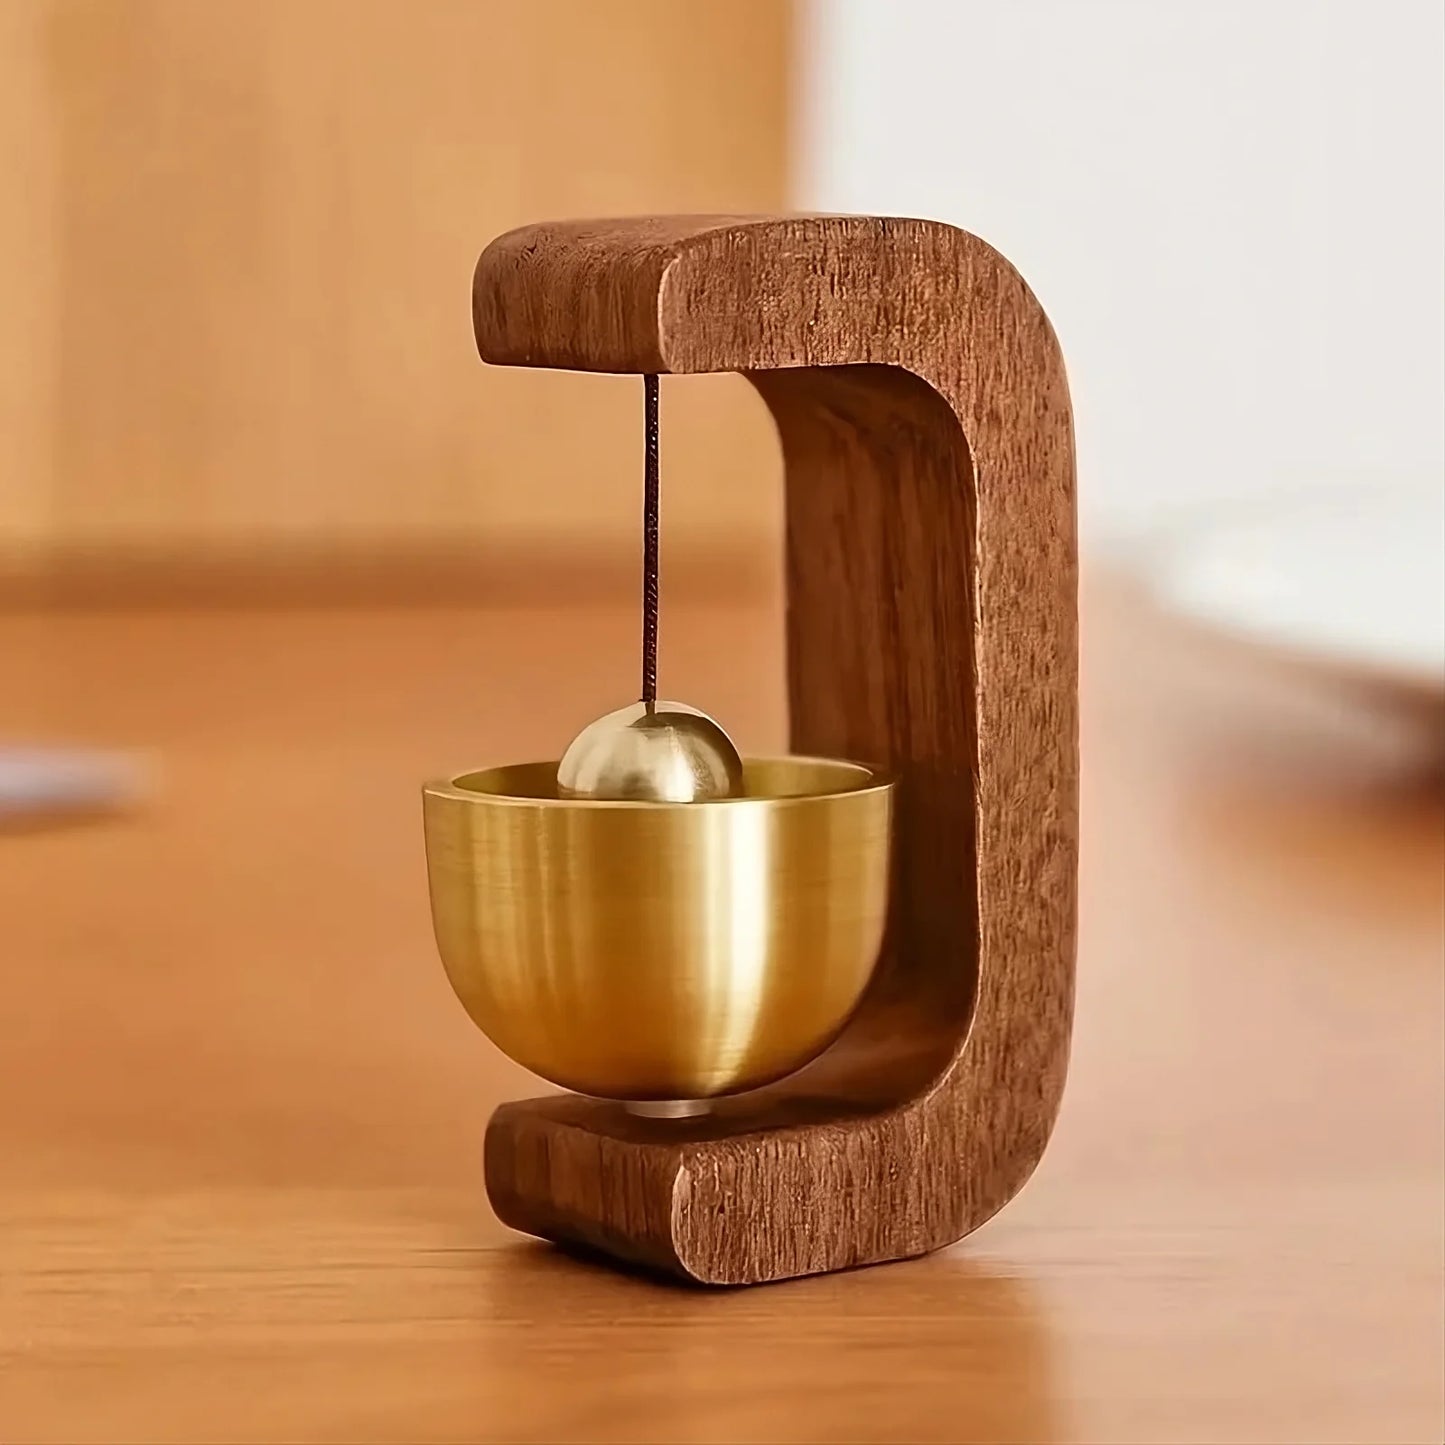 Chime Doorbell: Japanese Cedar Edition